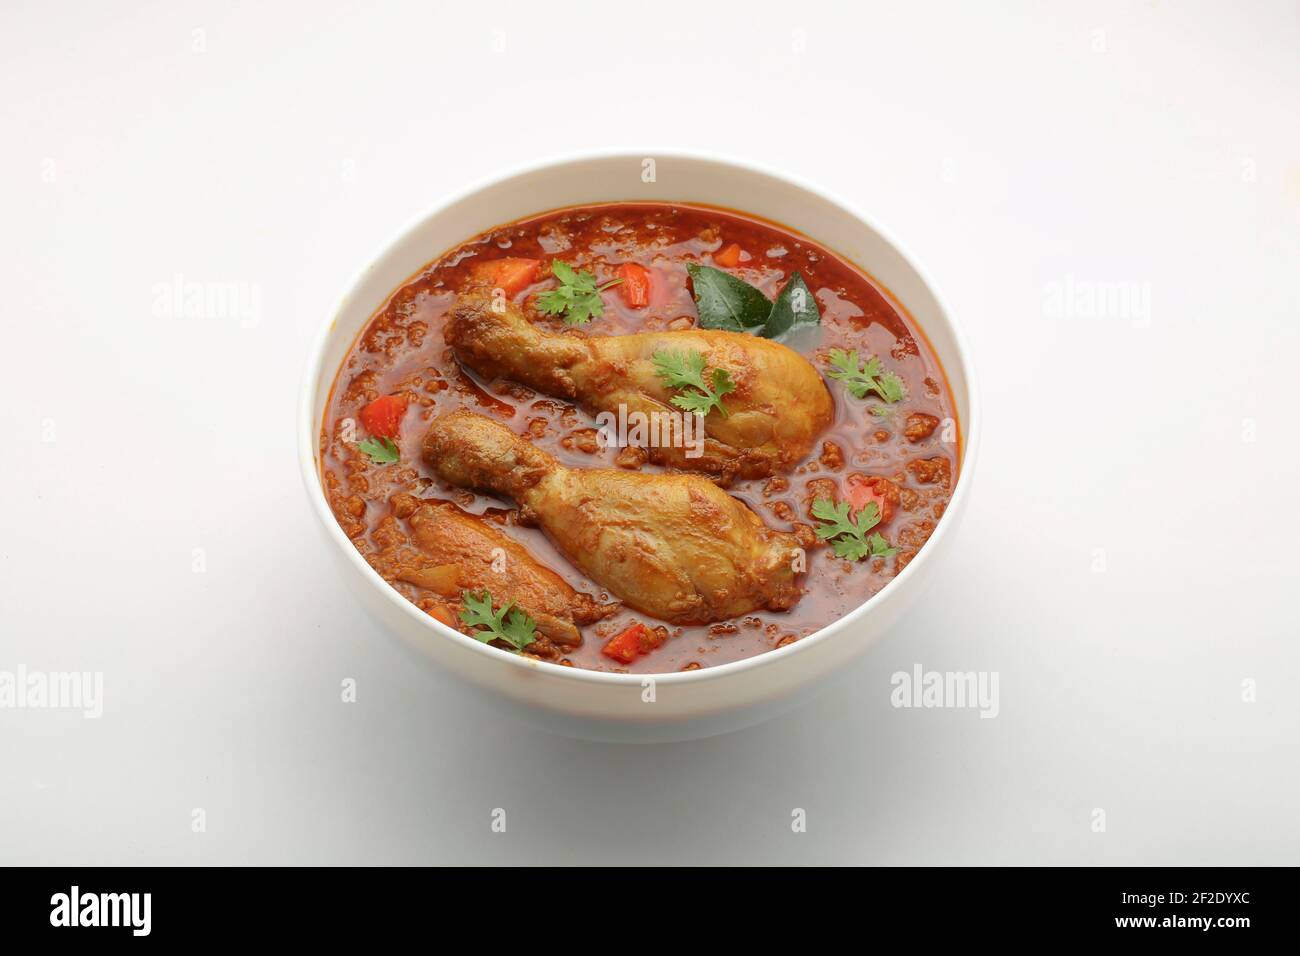 Curry de pollo o masala, plato picante de pata de pollo rojizo adornada con hoja de cilantro y Chile verde fresco. Foto de stock